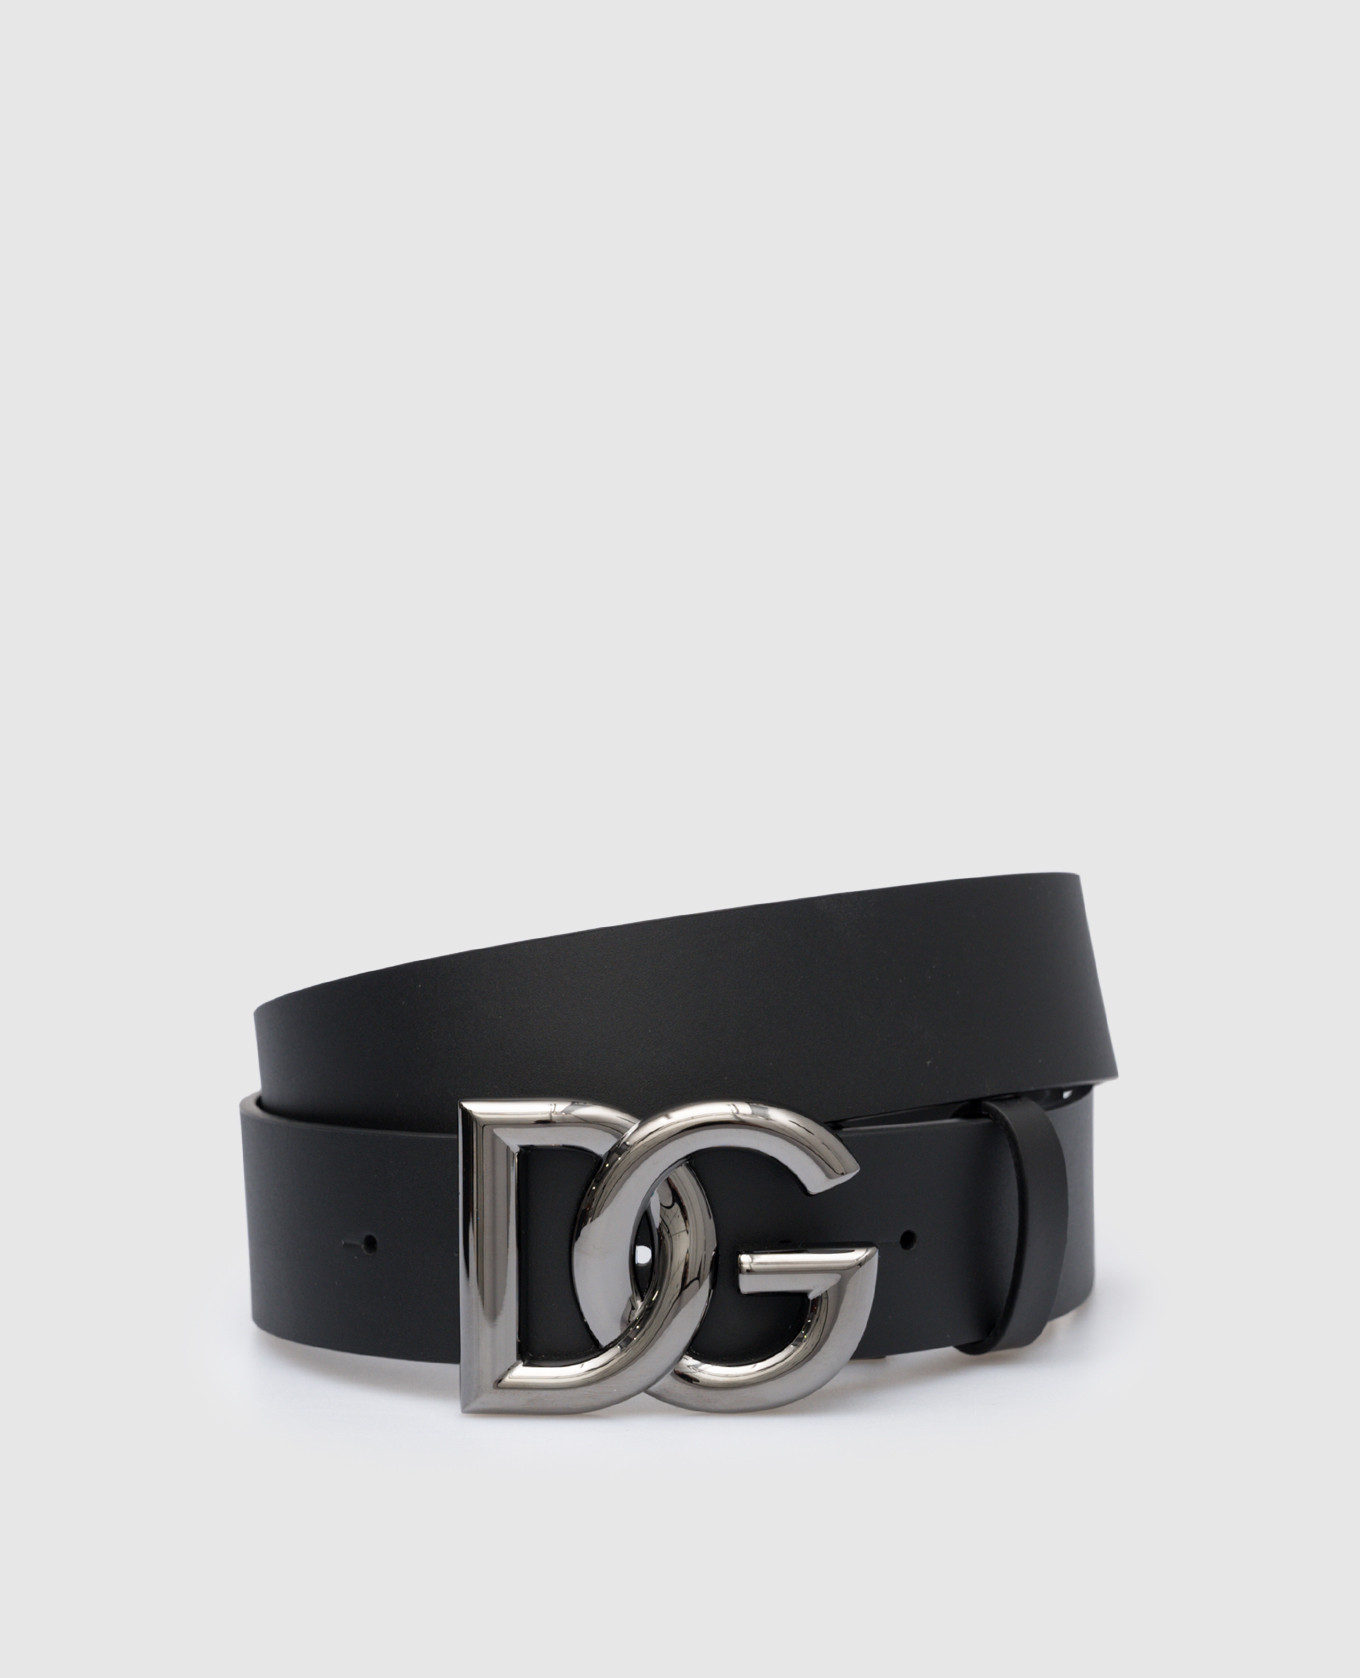 Black leather belt with DG logo buckle